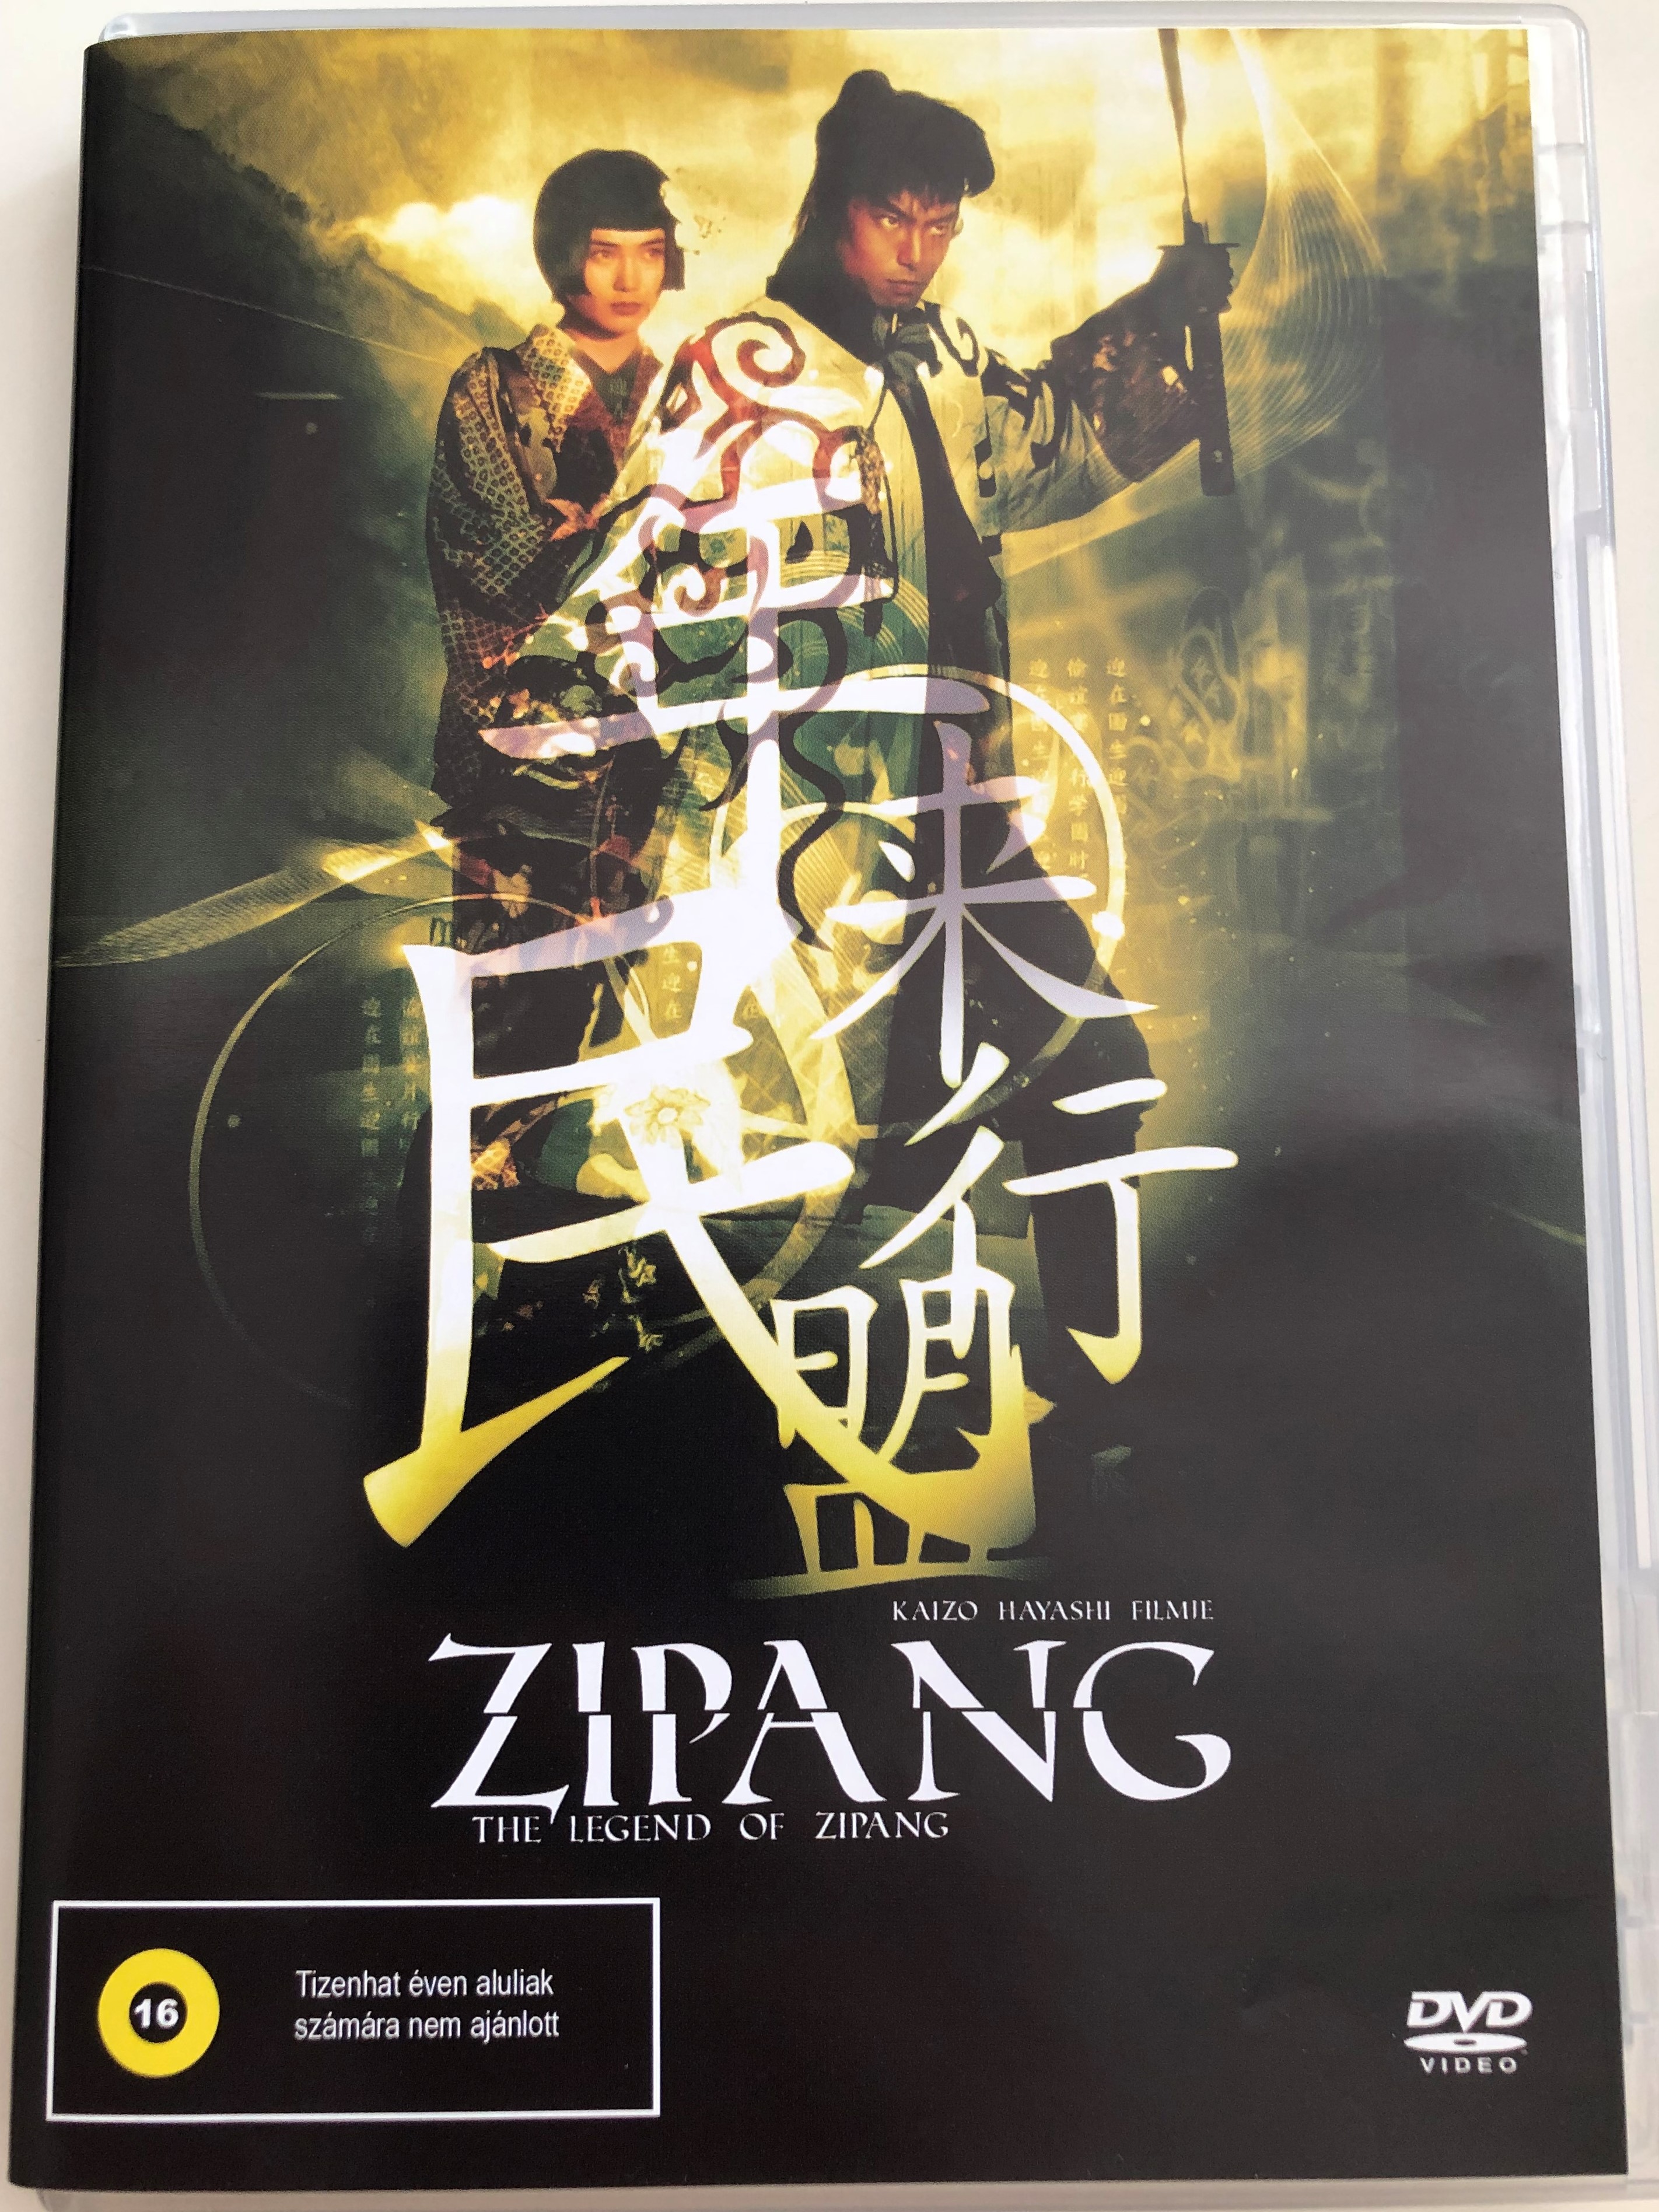 jipangu-the-legend-of-zipand-dvd-1990-zipang-directed-by-kaizo-hayashi-starring-masahiro-takashima-narumi-yasuda-mikijiro-hira-1-.jpg